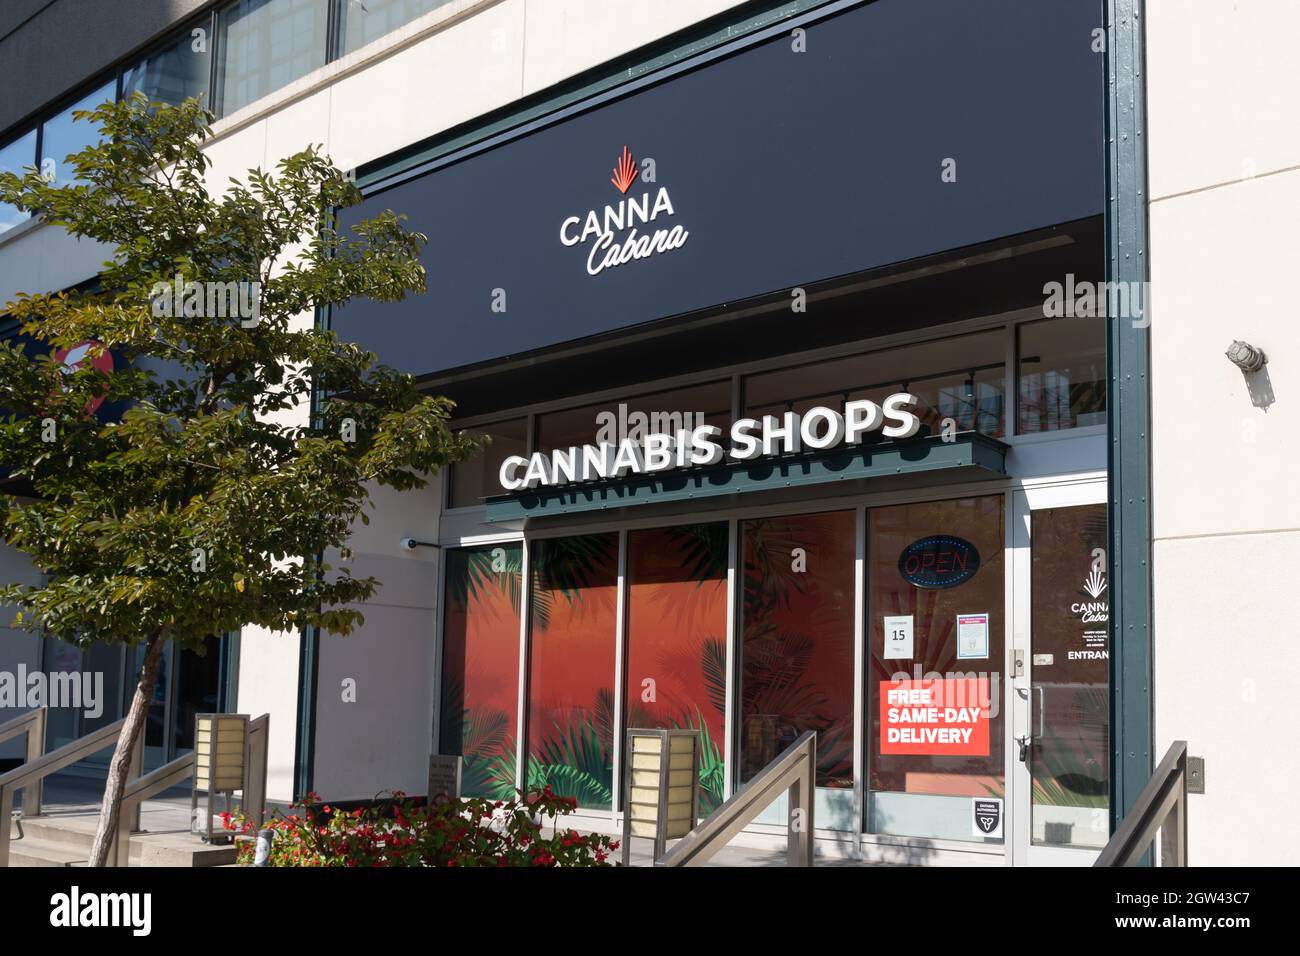 Toronto, Canada - October 2, 2021: A Canna Cabana Cannabis shop on King St W. in Toronto, Canada. Stock Photo